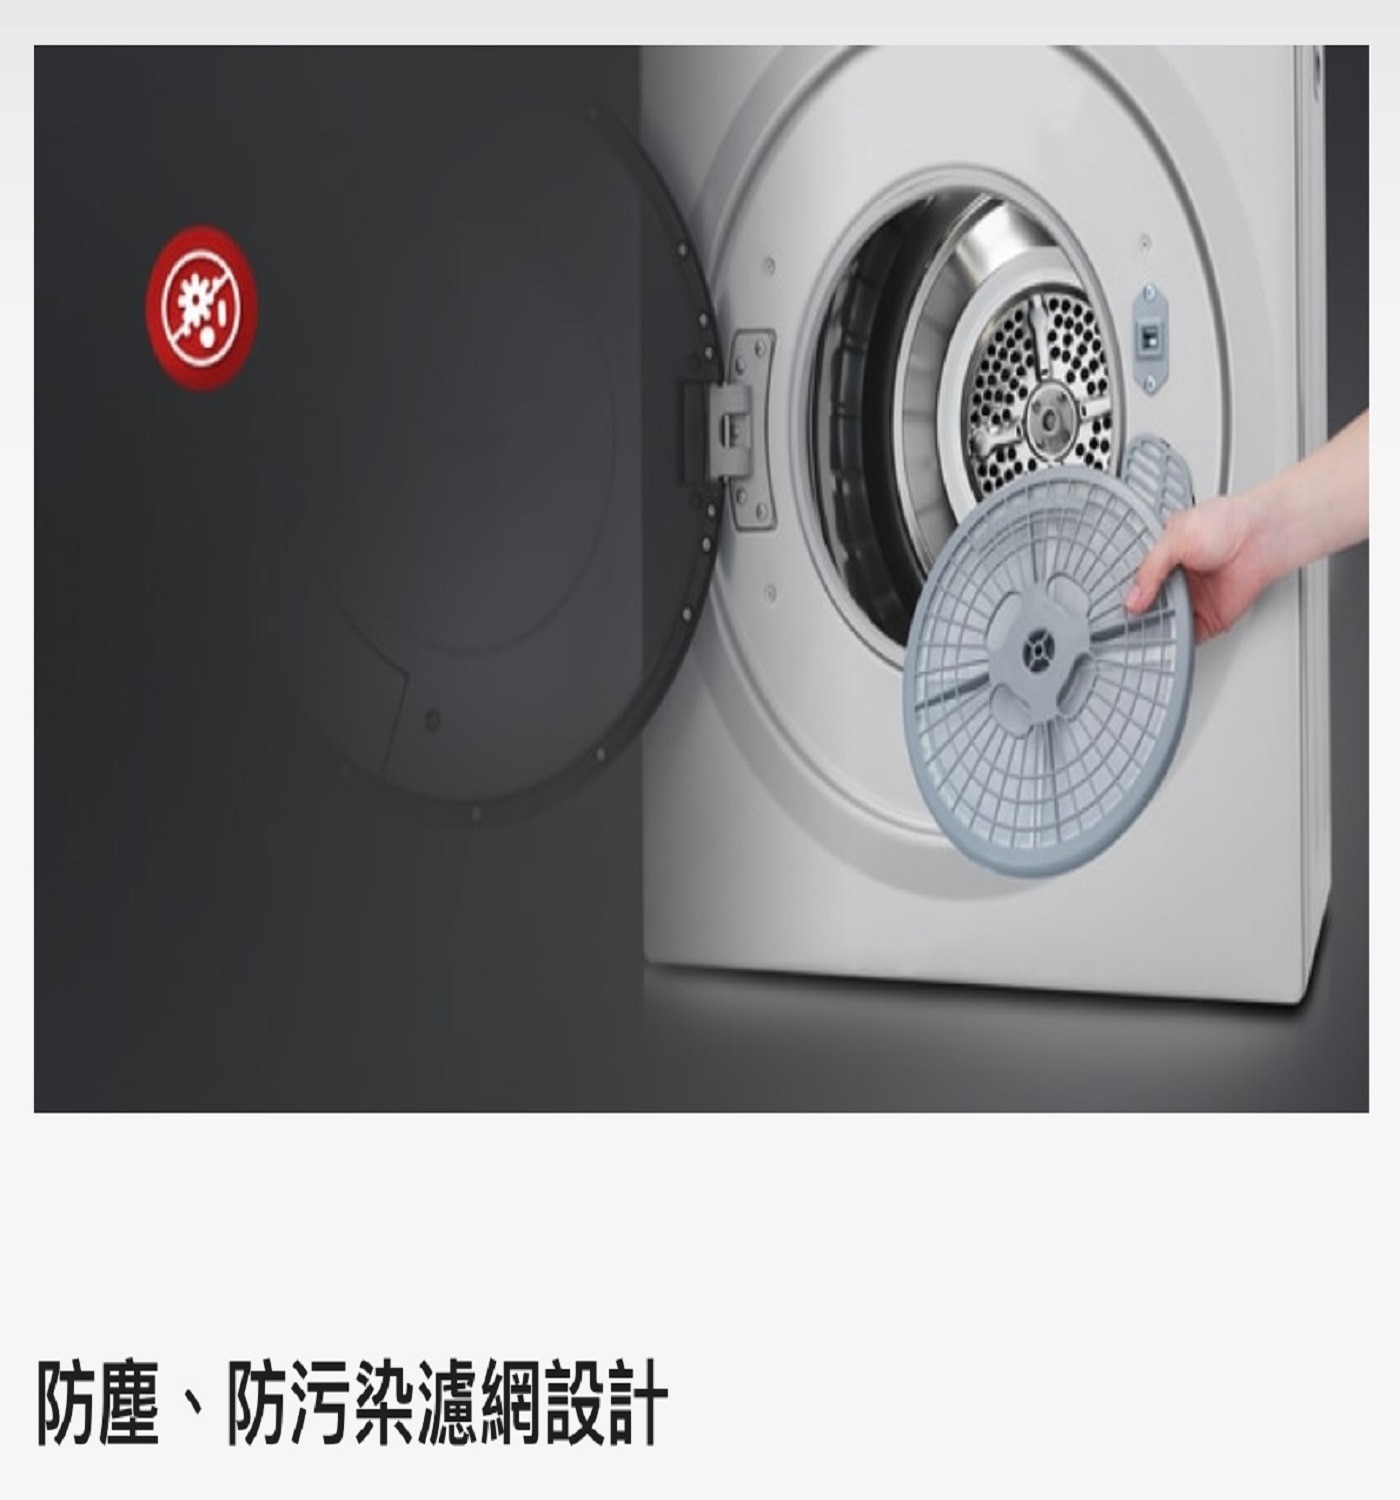 Panasonic國際牌12公斤溫水洗脫滾筒洗衣機NA-V120HW+7公斤架上型滾筒乾衣機 NH-L70G 組合，30℃溫水槽洗淨，溫水泡洗淨，高級衣水洗行程，不鏽鋼內槽。